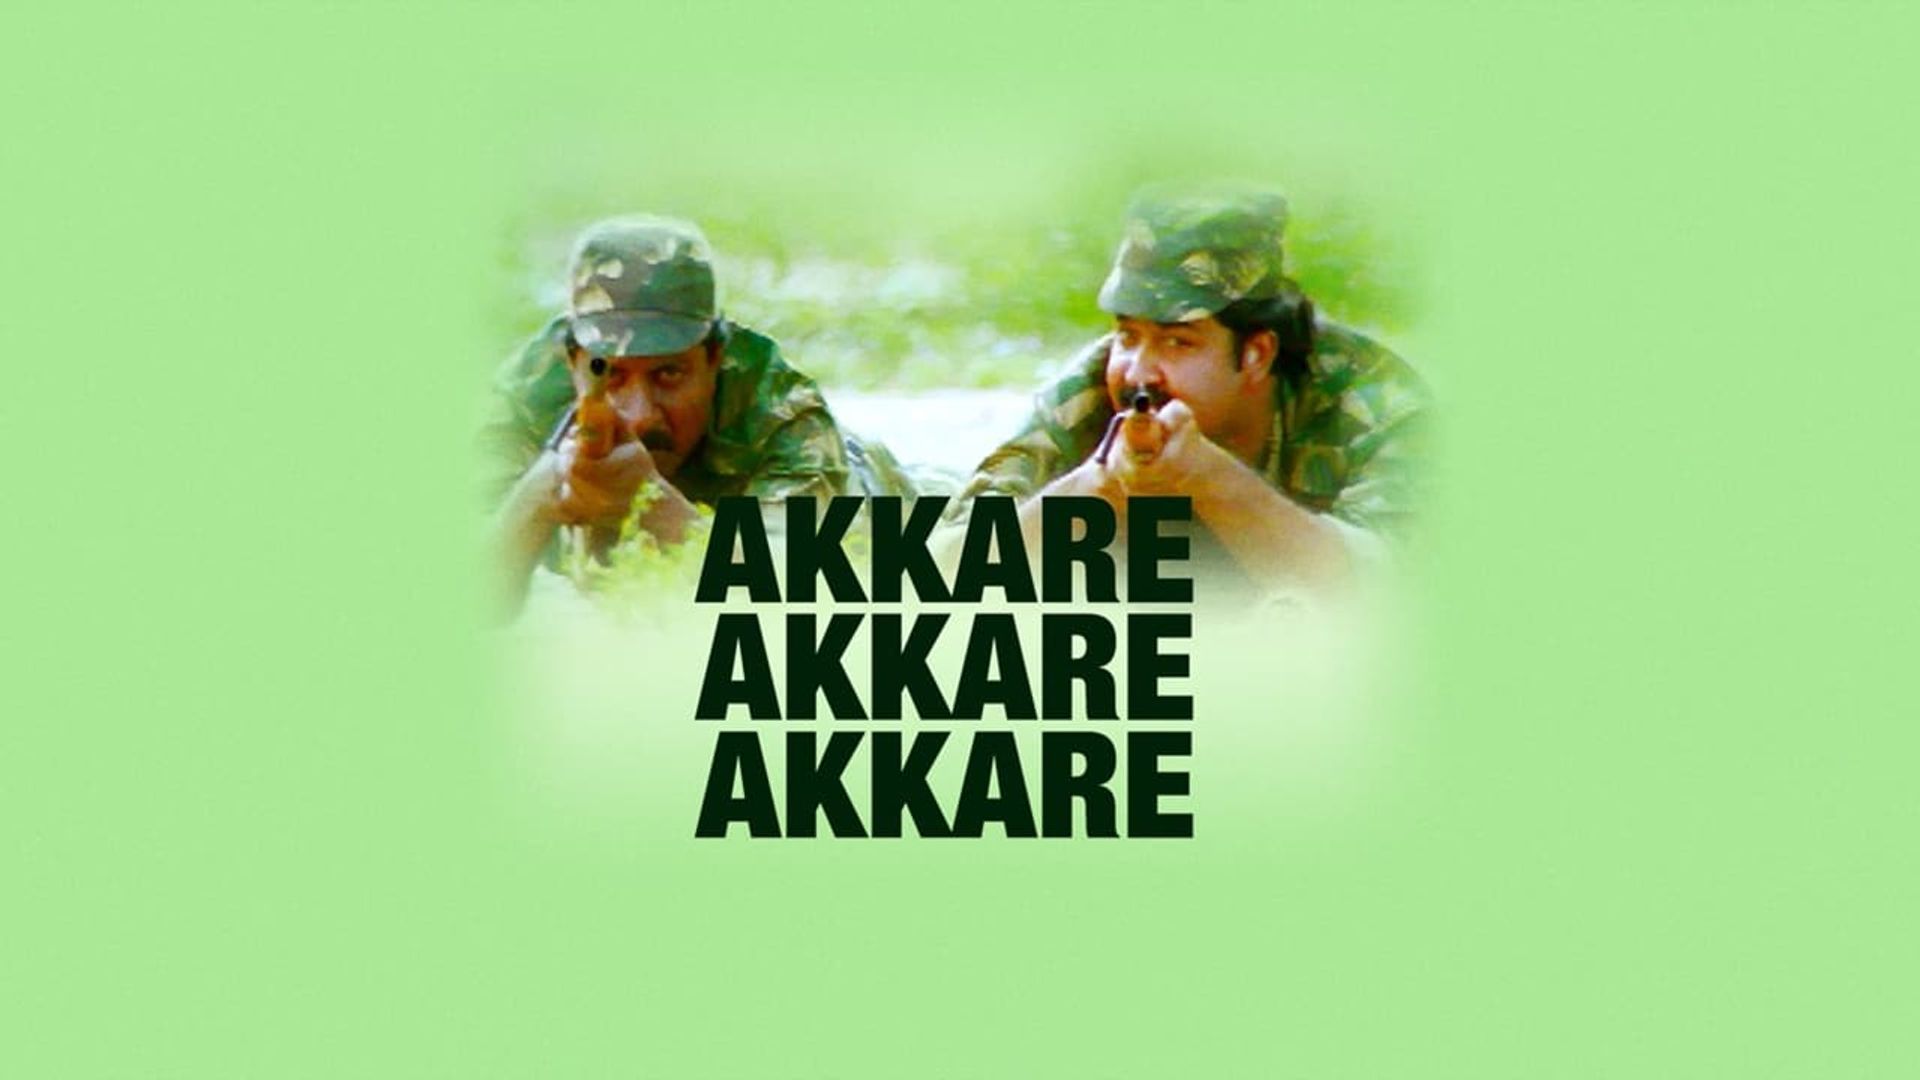 Akkare Akkare Akkare background